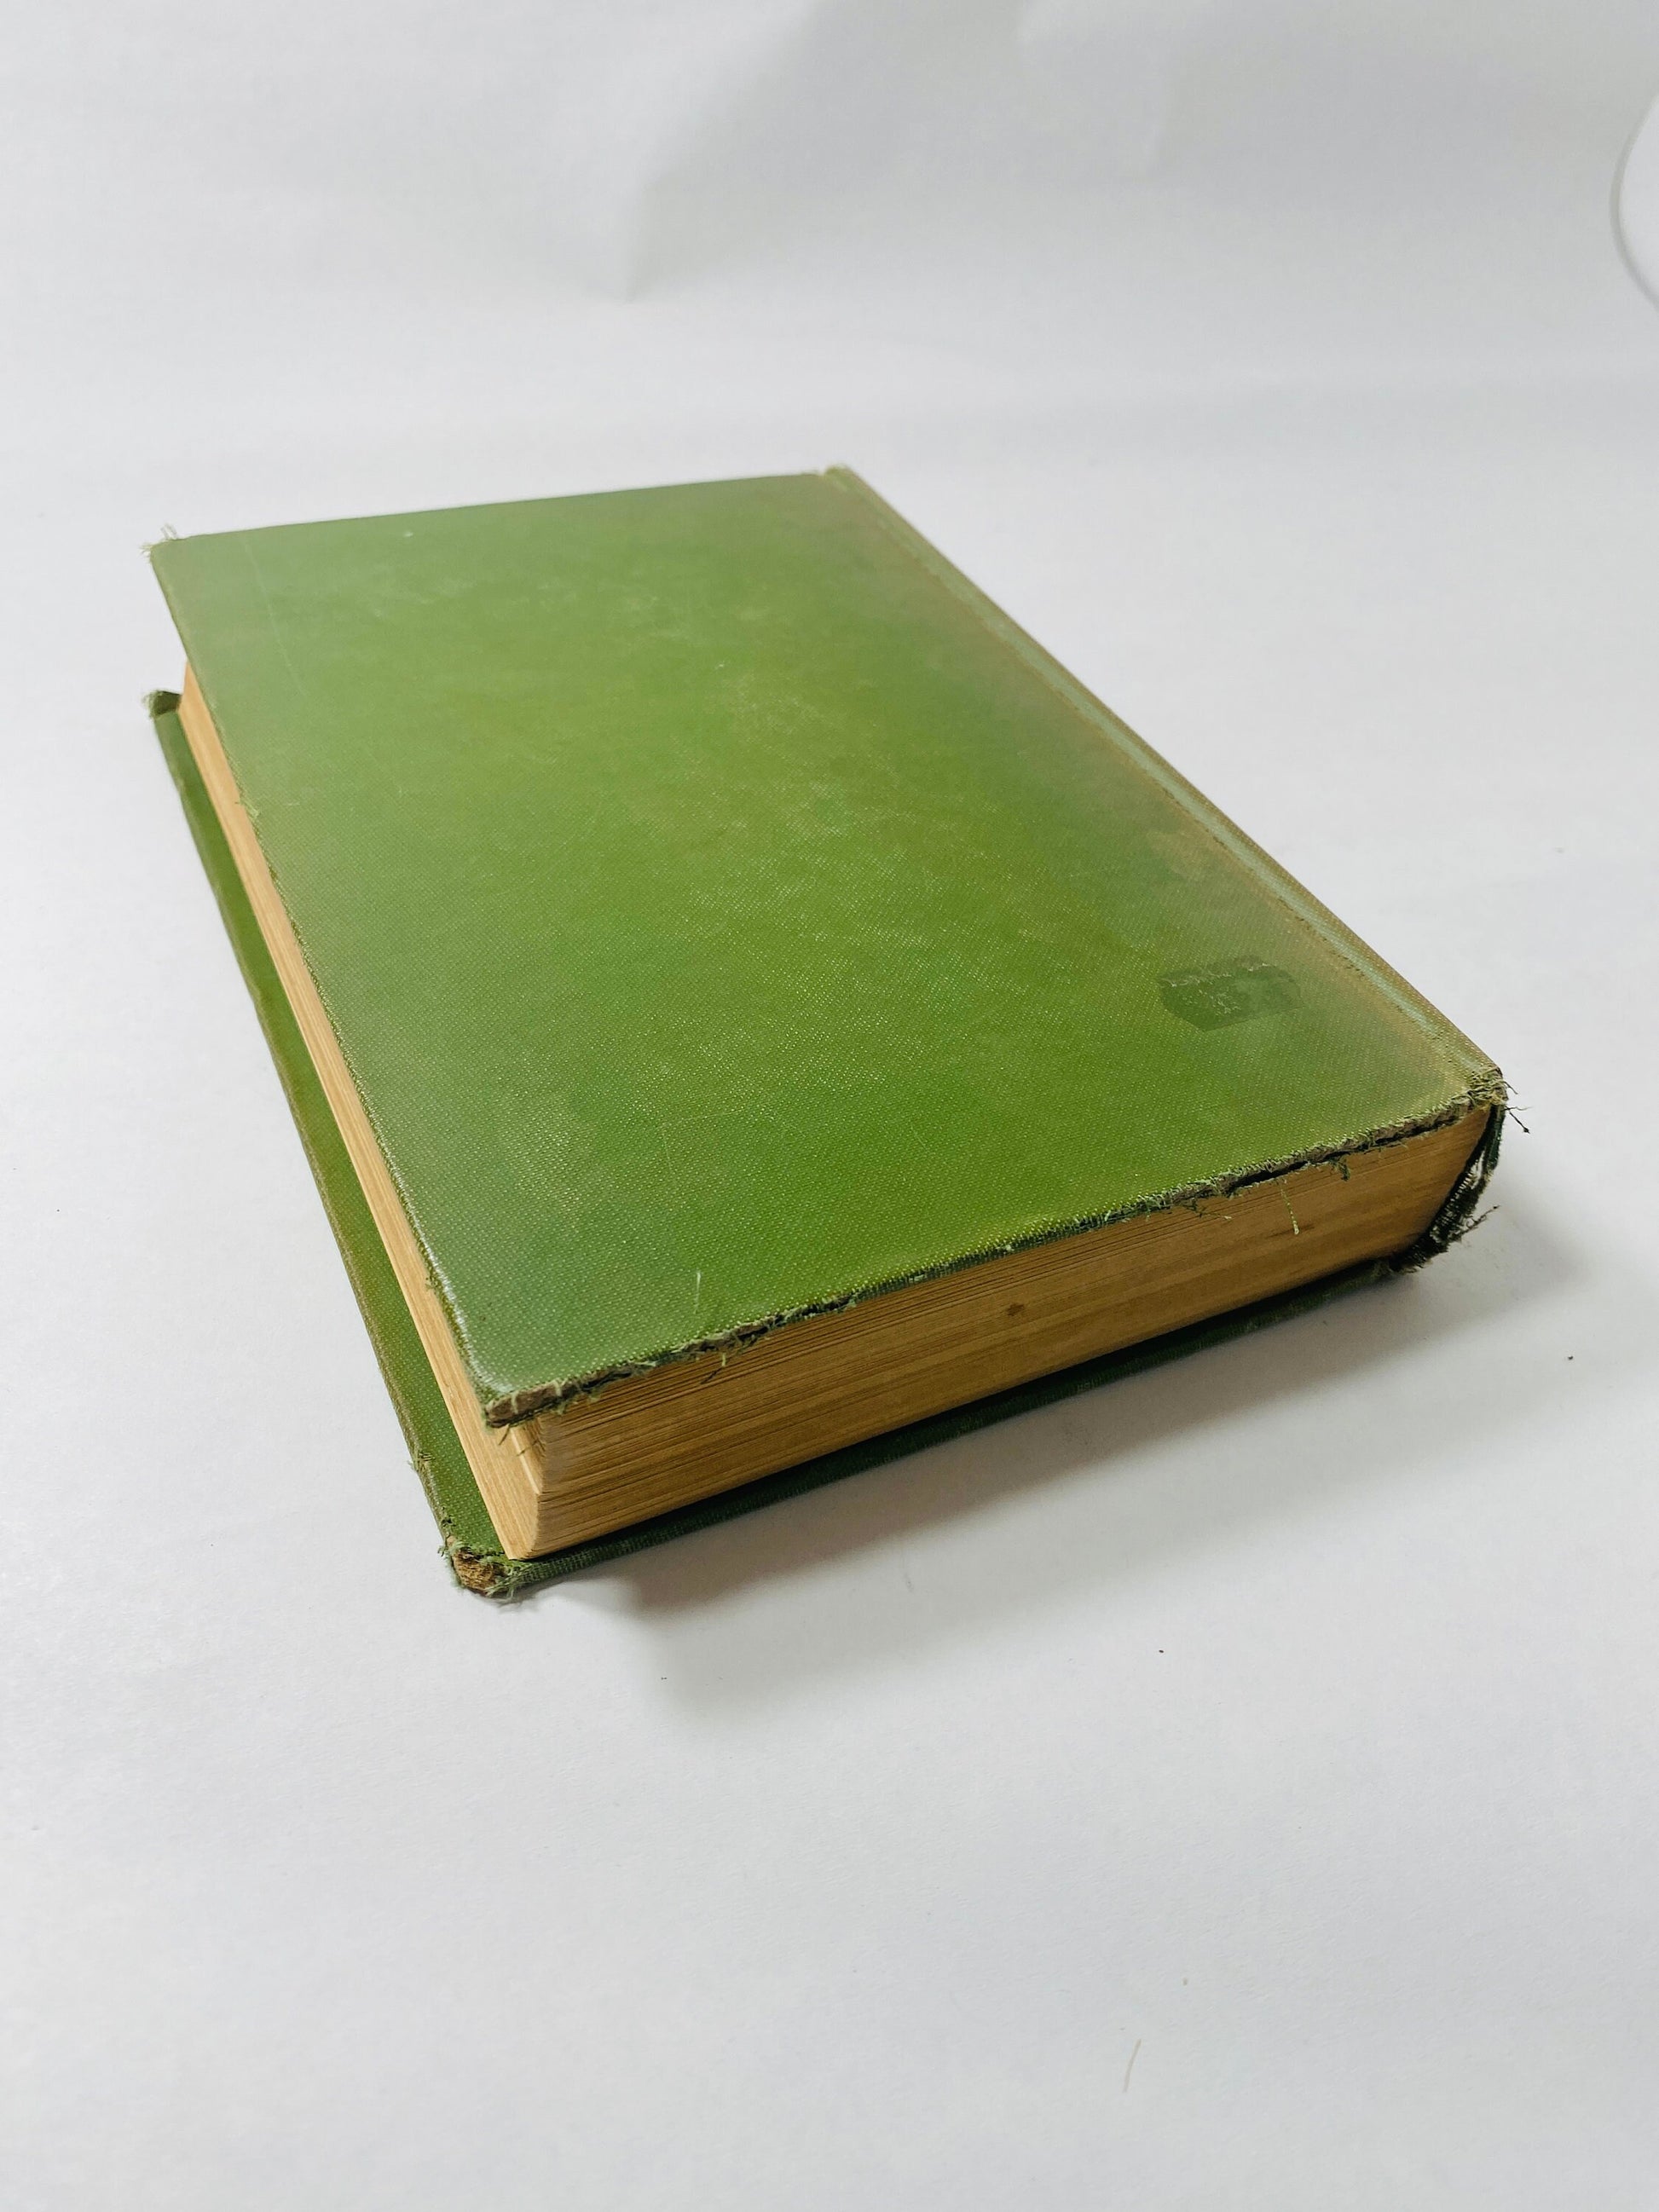 Fountainhead by Ayn Rand FIRST EDITION 12th printing circa 1943 Green cloth boards. Bobbs-Merrill.